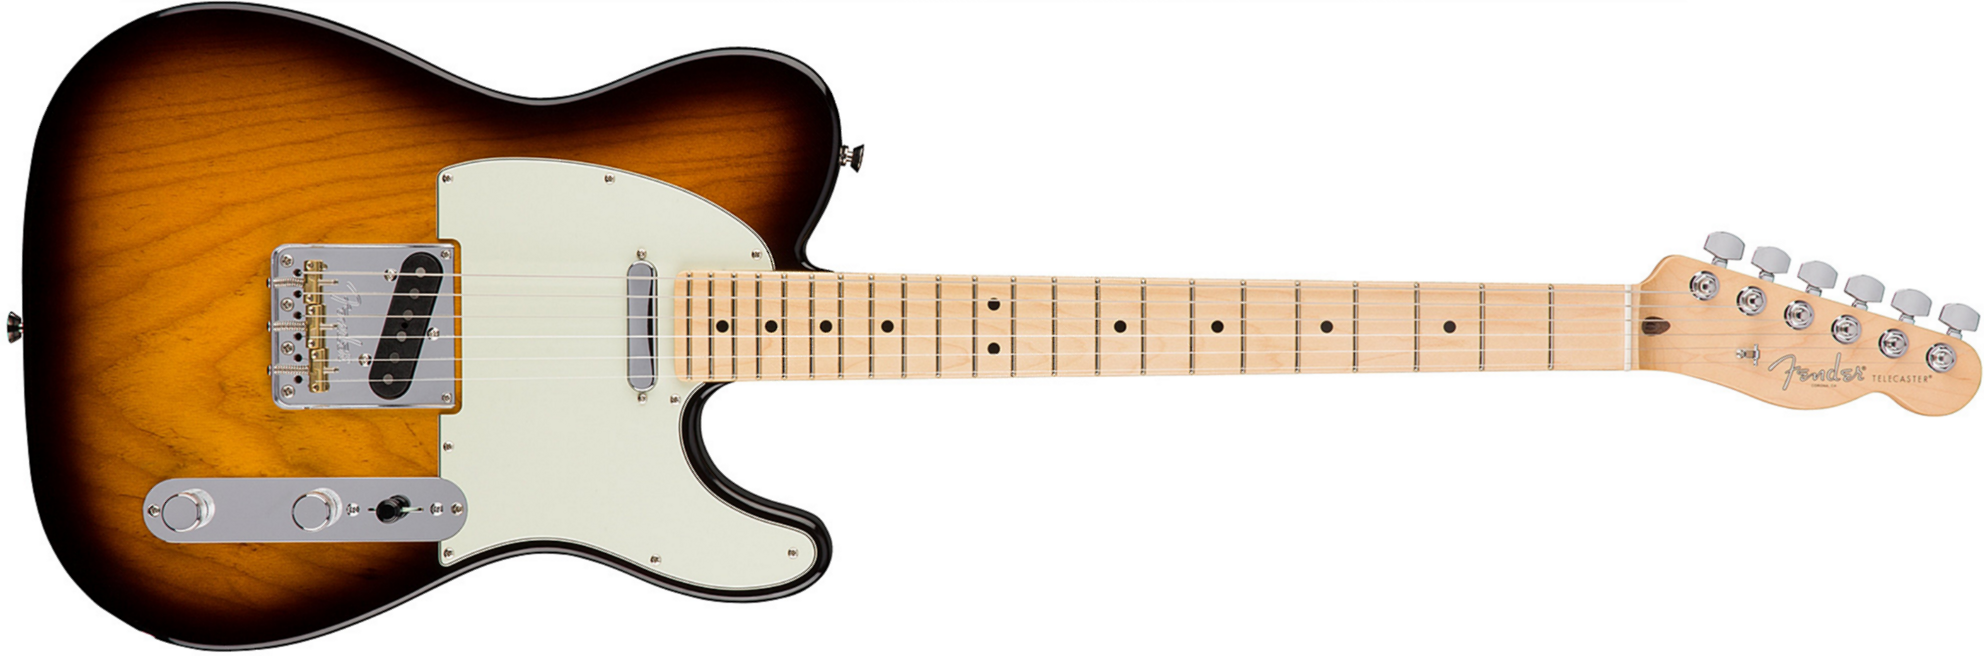 Fender Tele American Professional 2s Usa Mn - 2-color Sunburst - Televorm elektrische gitaar - Main picture